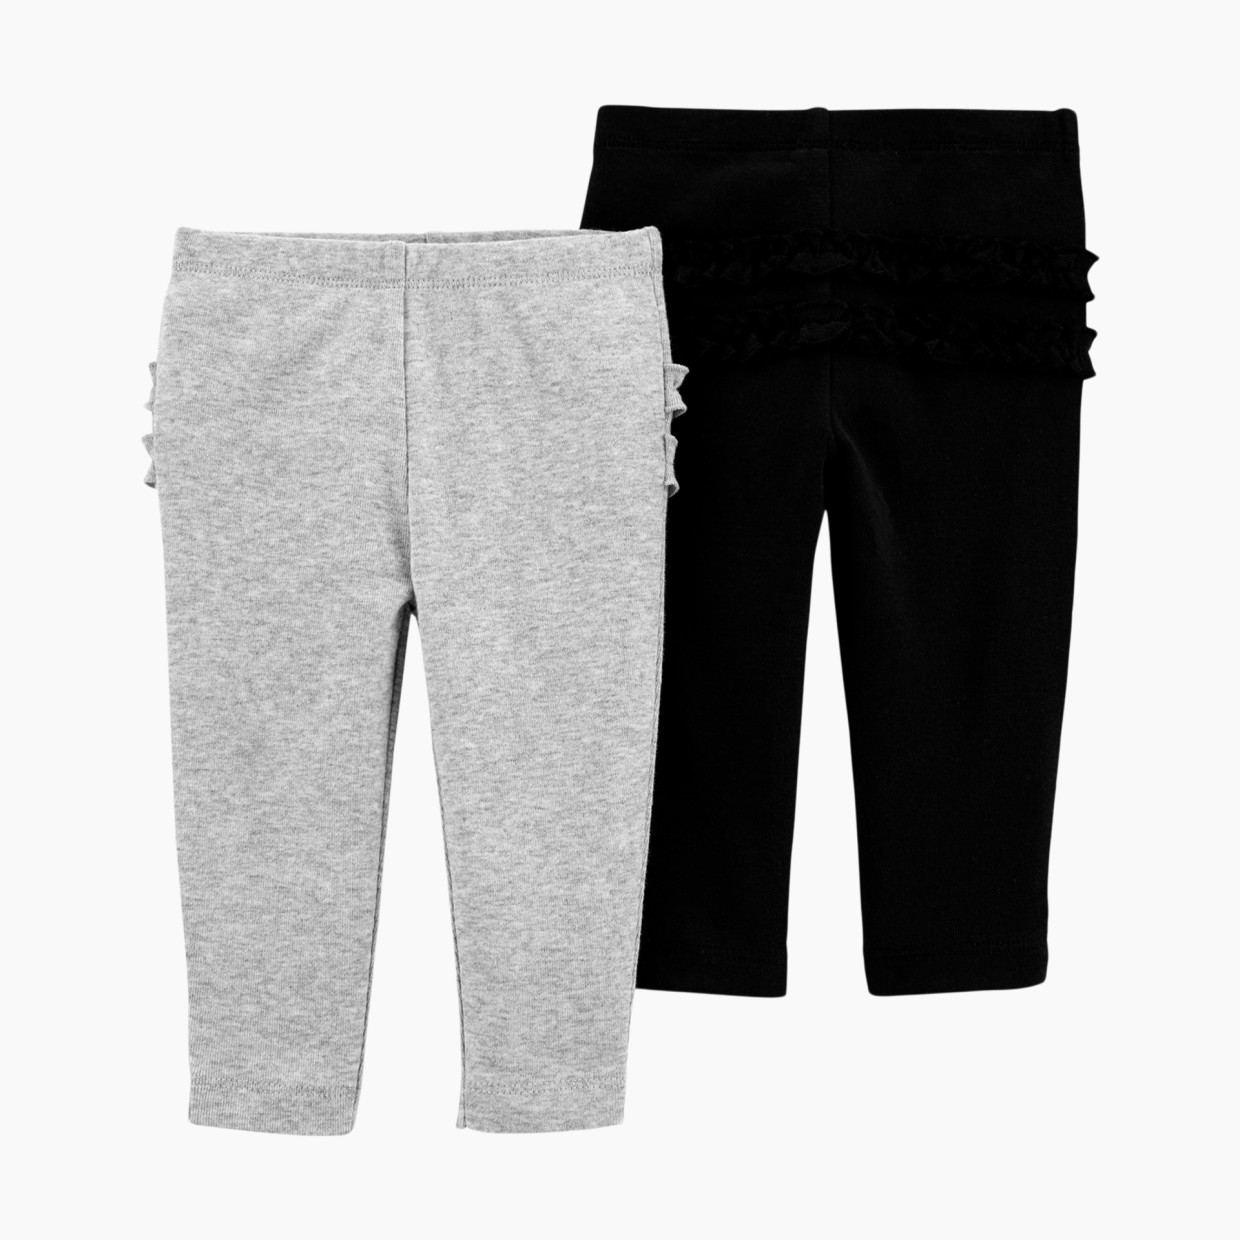 Carter's Cotton Pants (2 Pack) - Black/Grey, Nb.